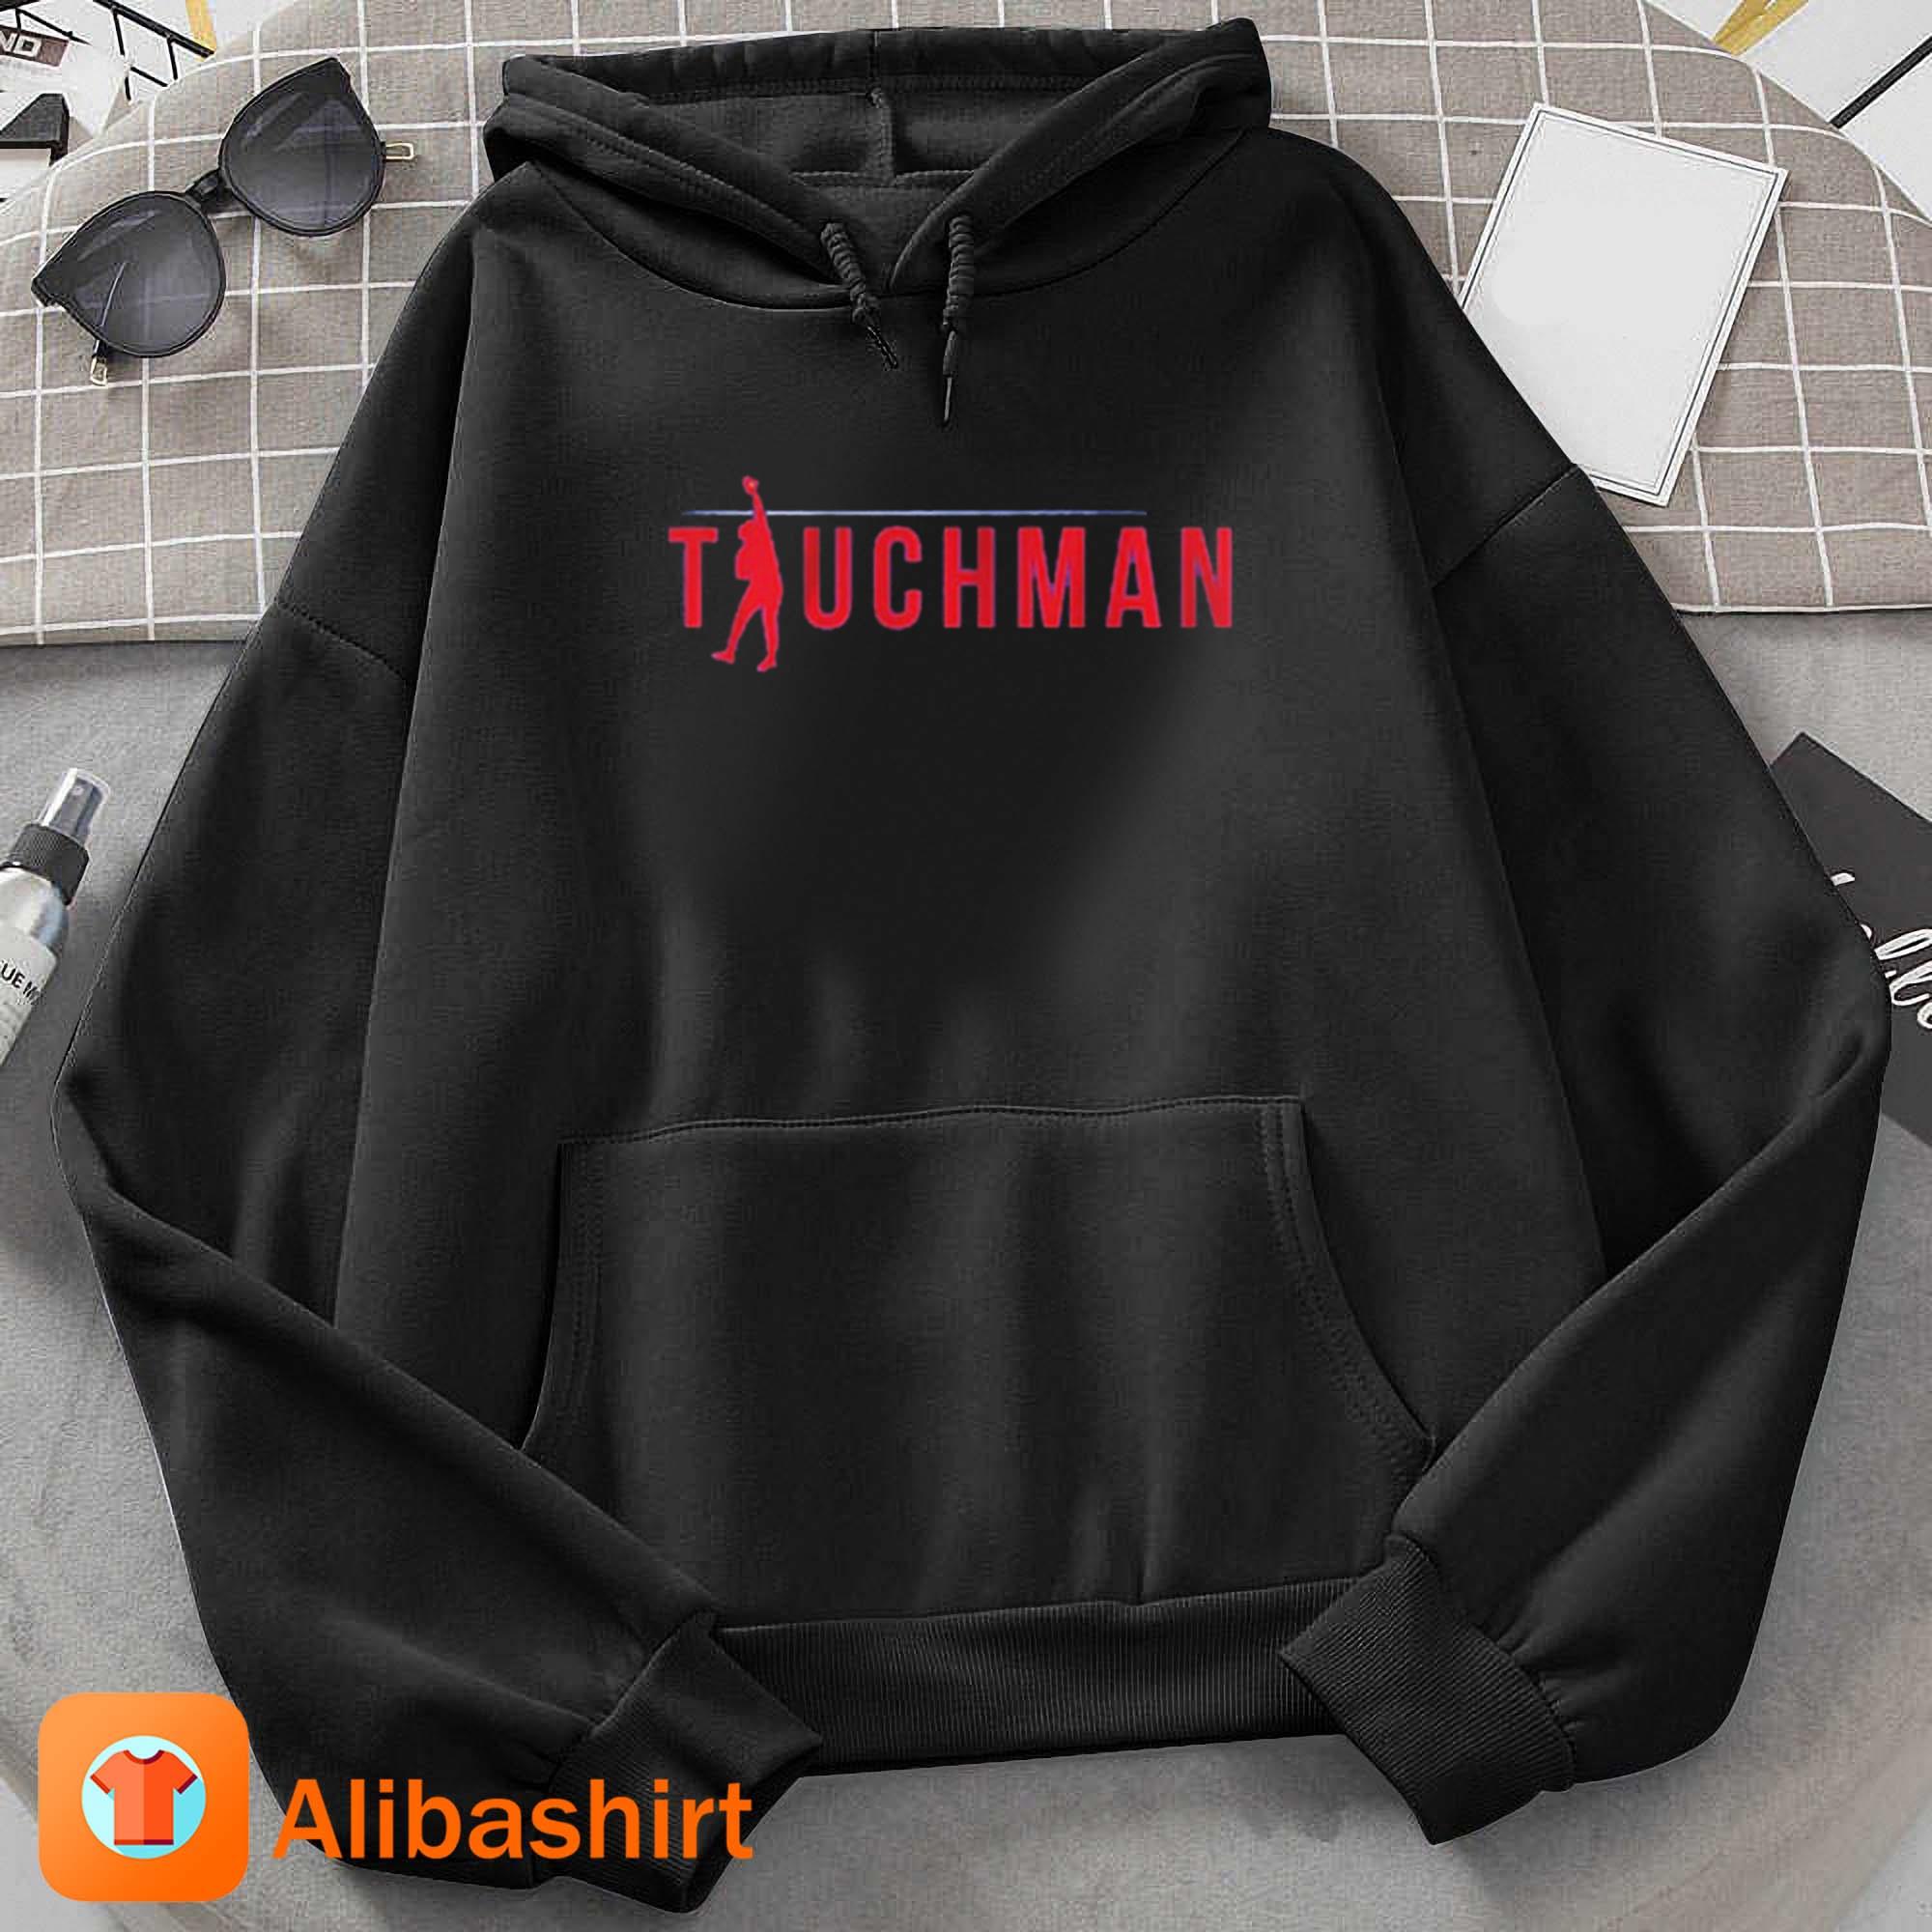 Mike Tauchman TAUCHMAN Shirt Hoodie